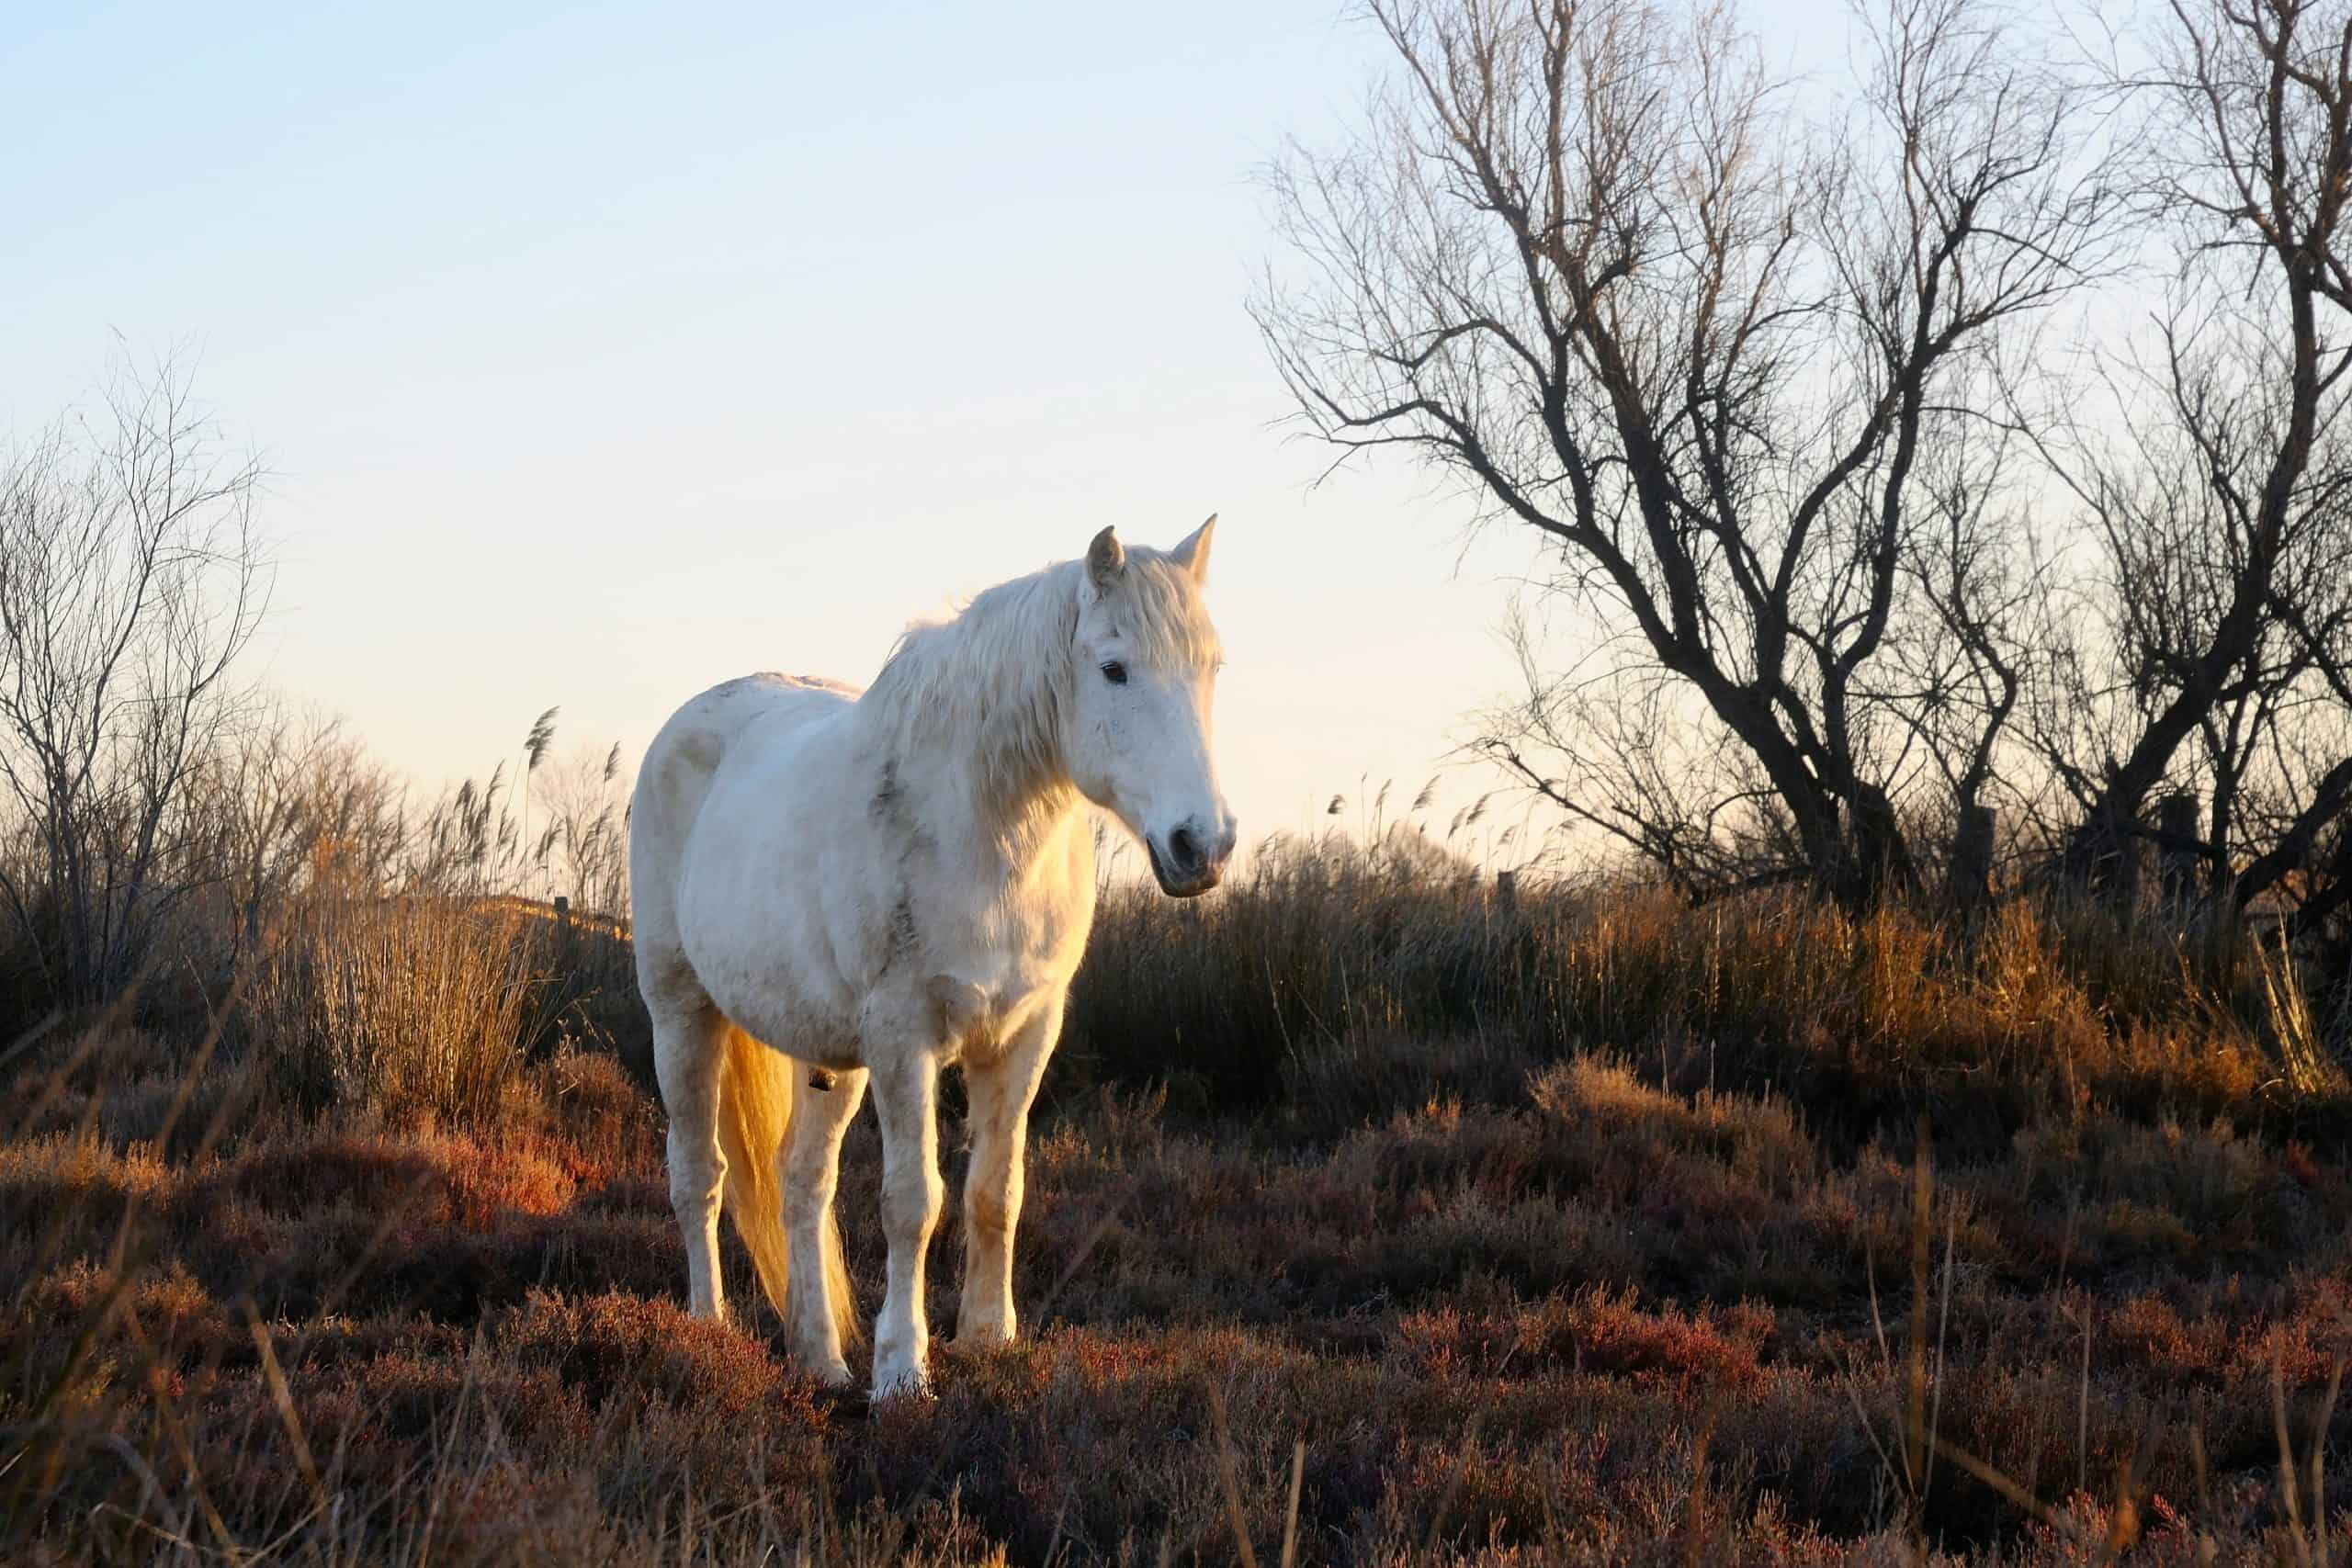 A white Camargue horse in a field.